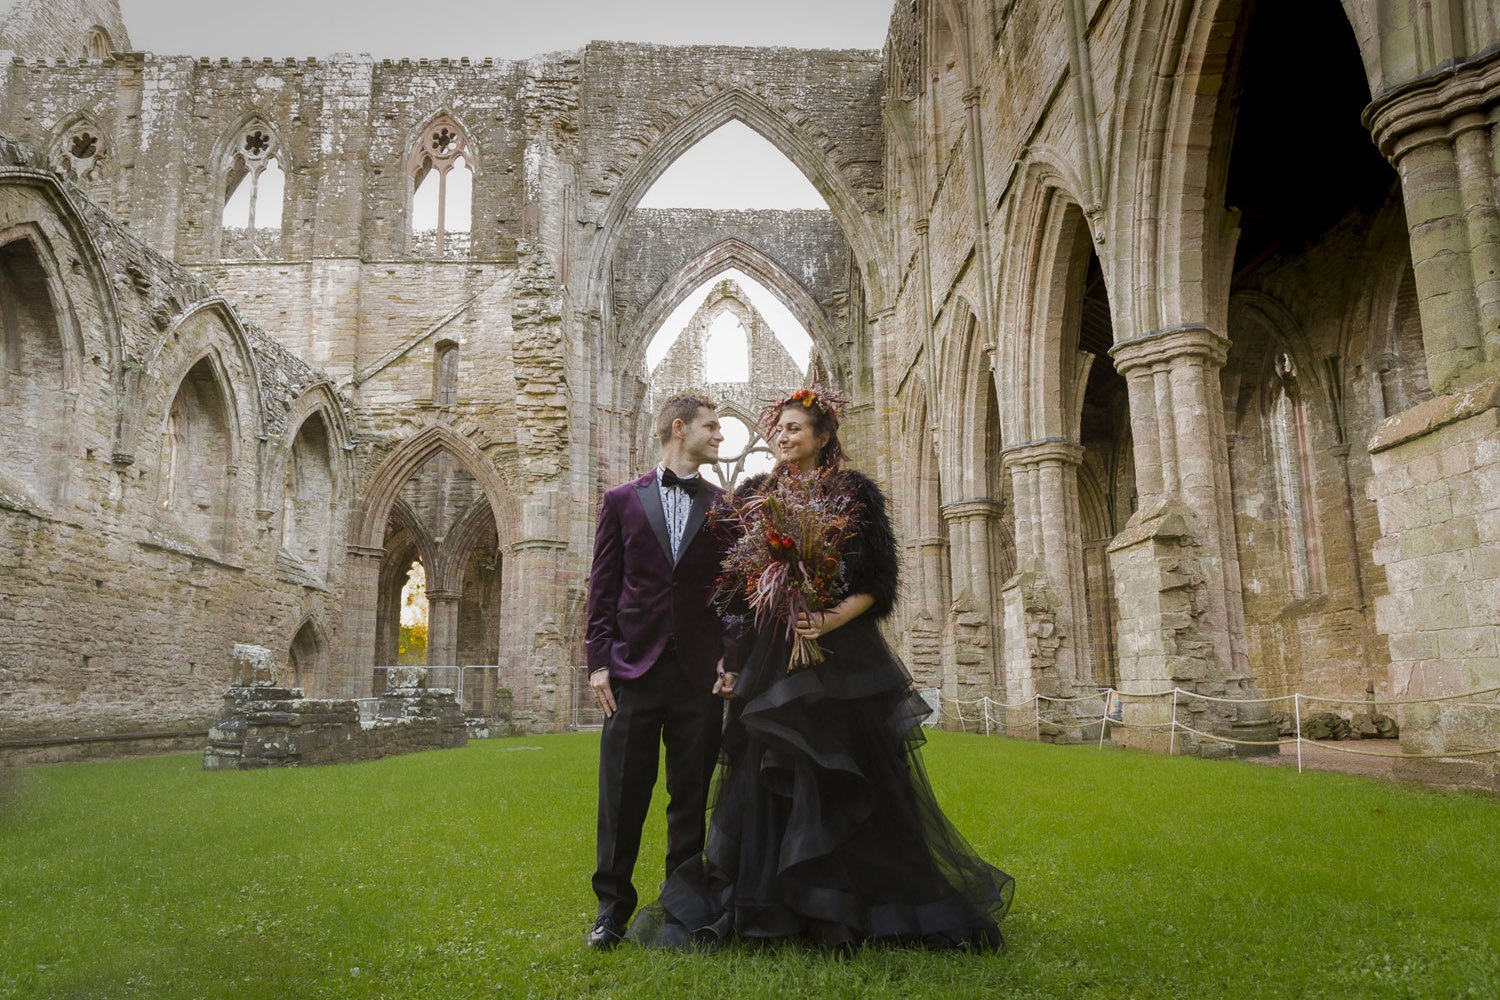 Morlove Wedding Photography - Charlene Lovesy - Where Mystical Tintern Meets Gothic Romance - Astra & Scott - The Old Station & Tintern Abbey